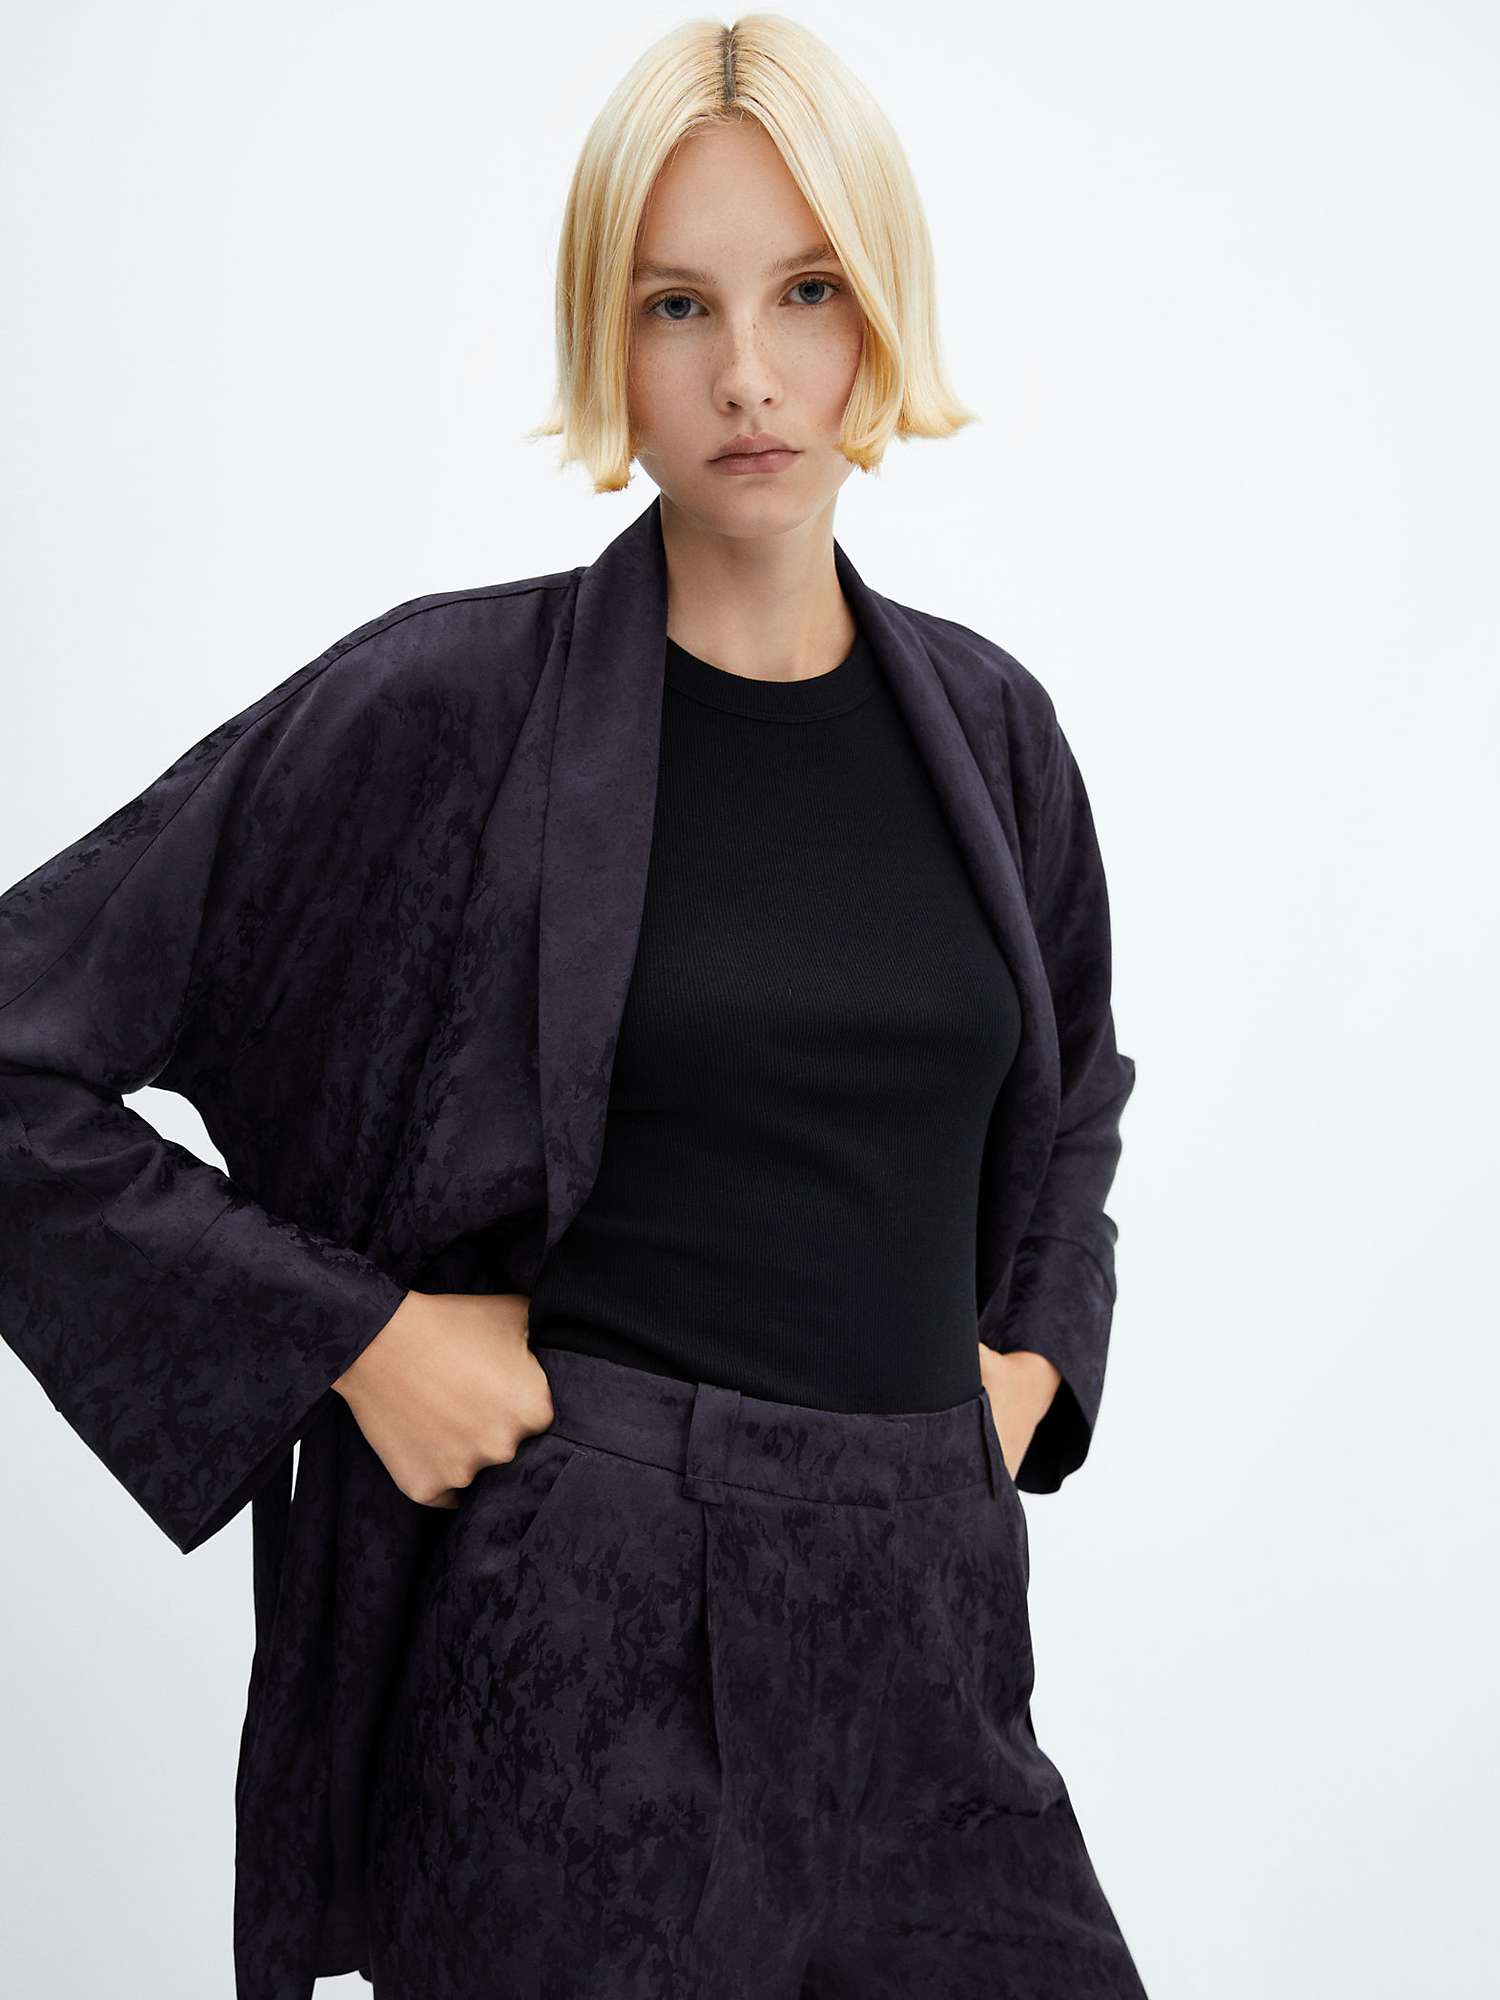 Buy Mango Astrid Jacquard Suit Trousers, Dark Blue Online at johnlewis.com